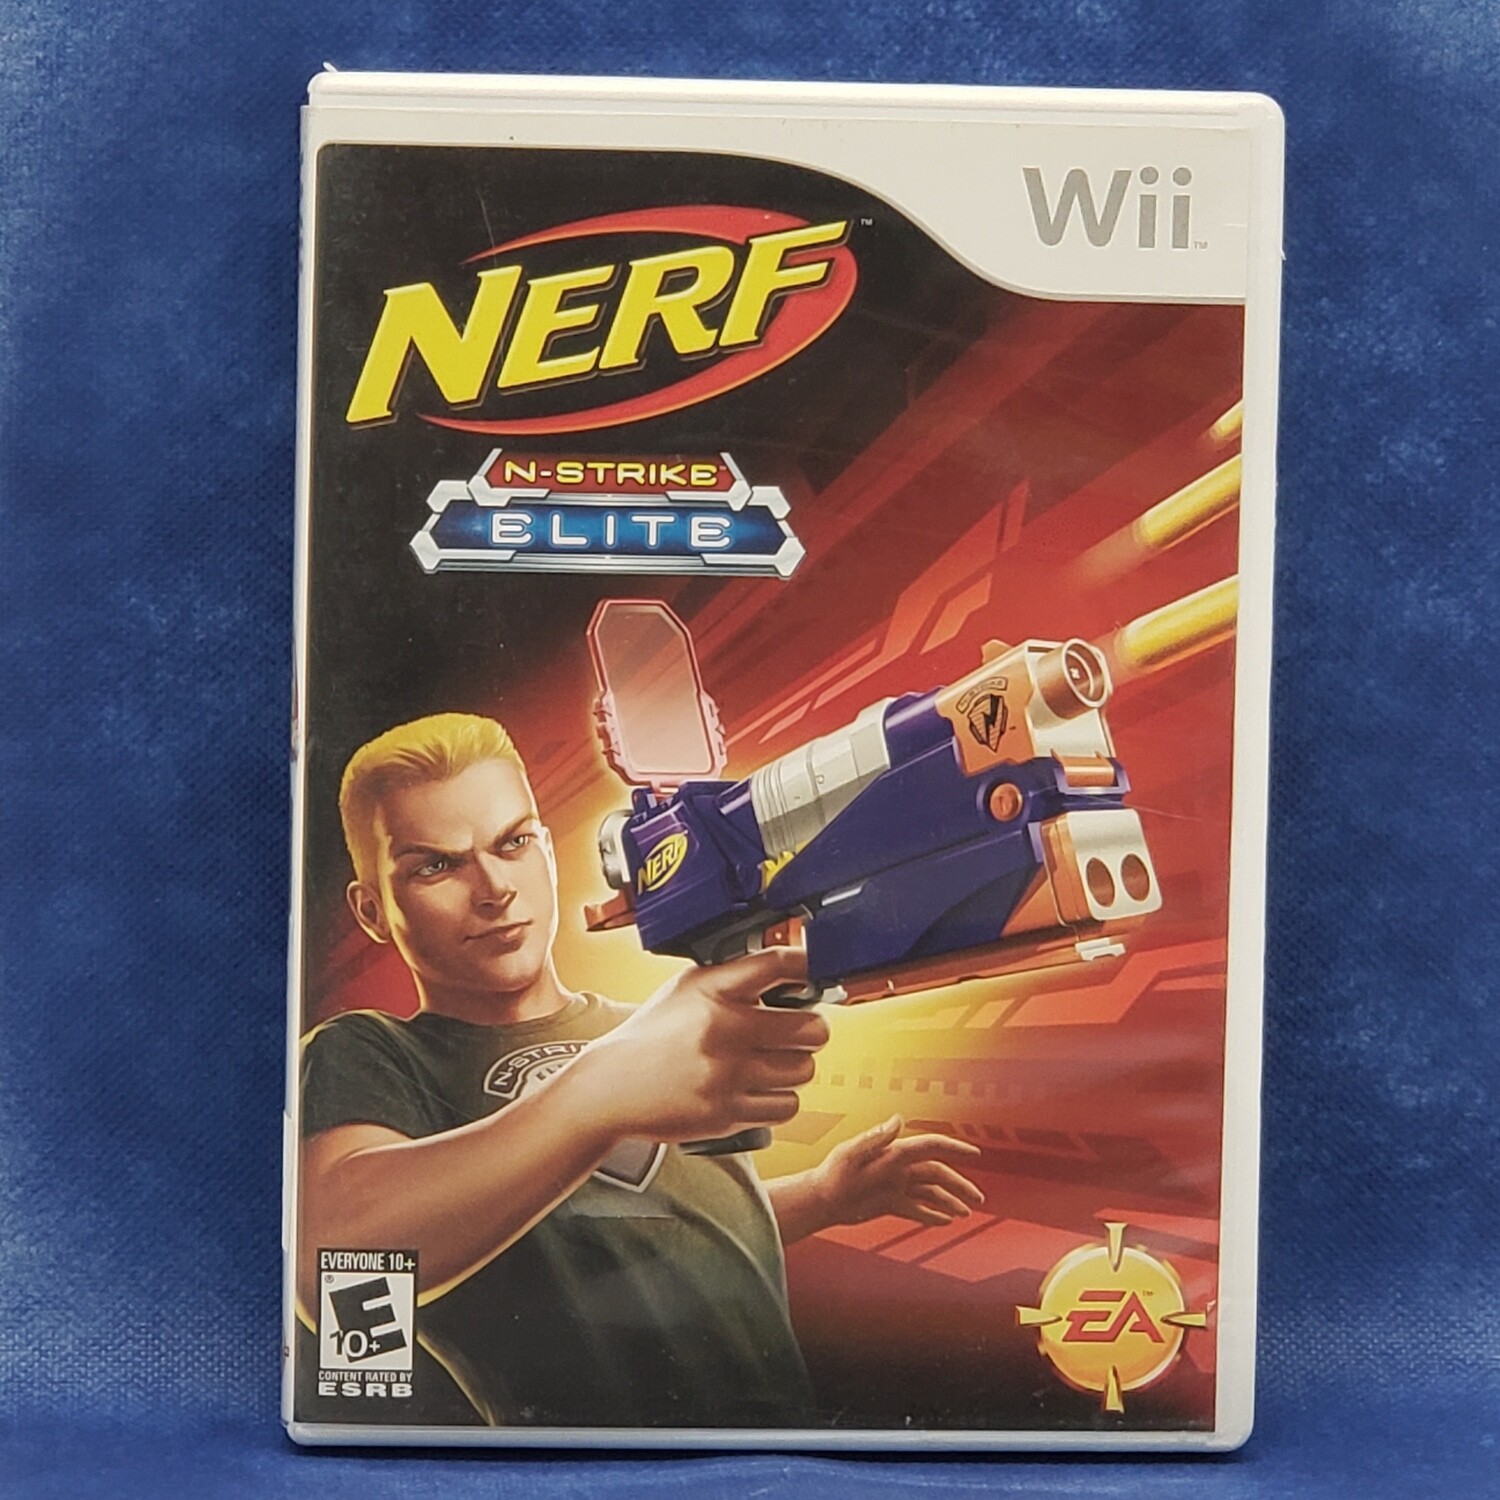 NERF N-Strike Elite Video Game for Wii - CIB - Used